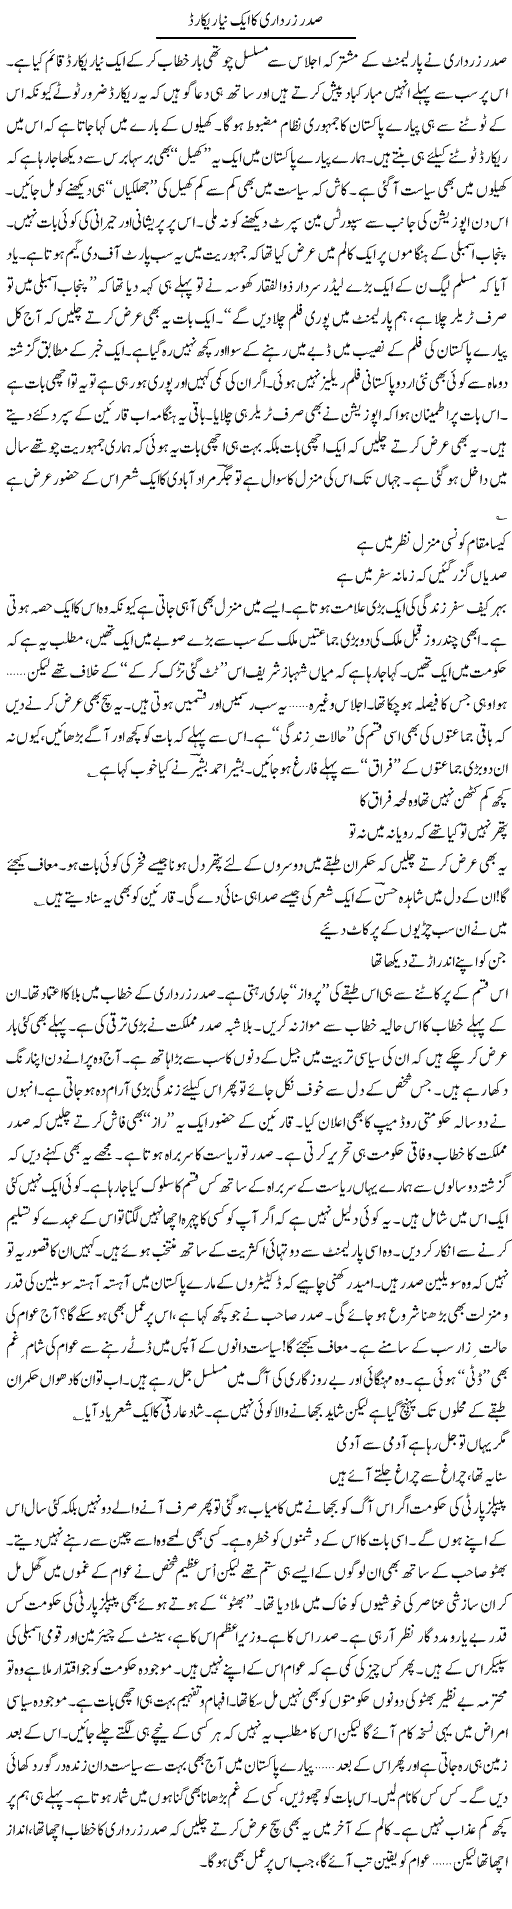 New Record of Zardari Express Column Ijaz Hafeez 26 March 2011